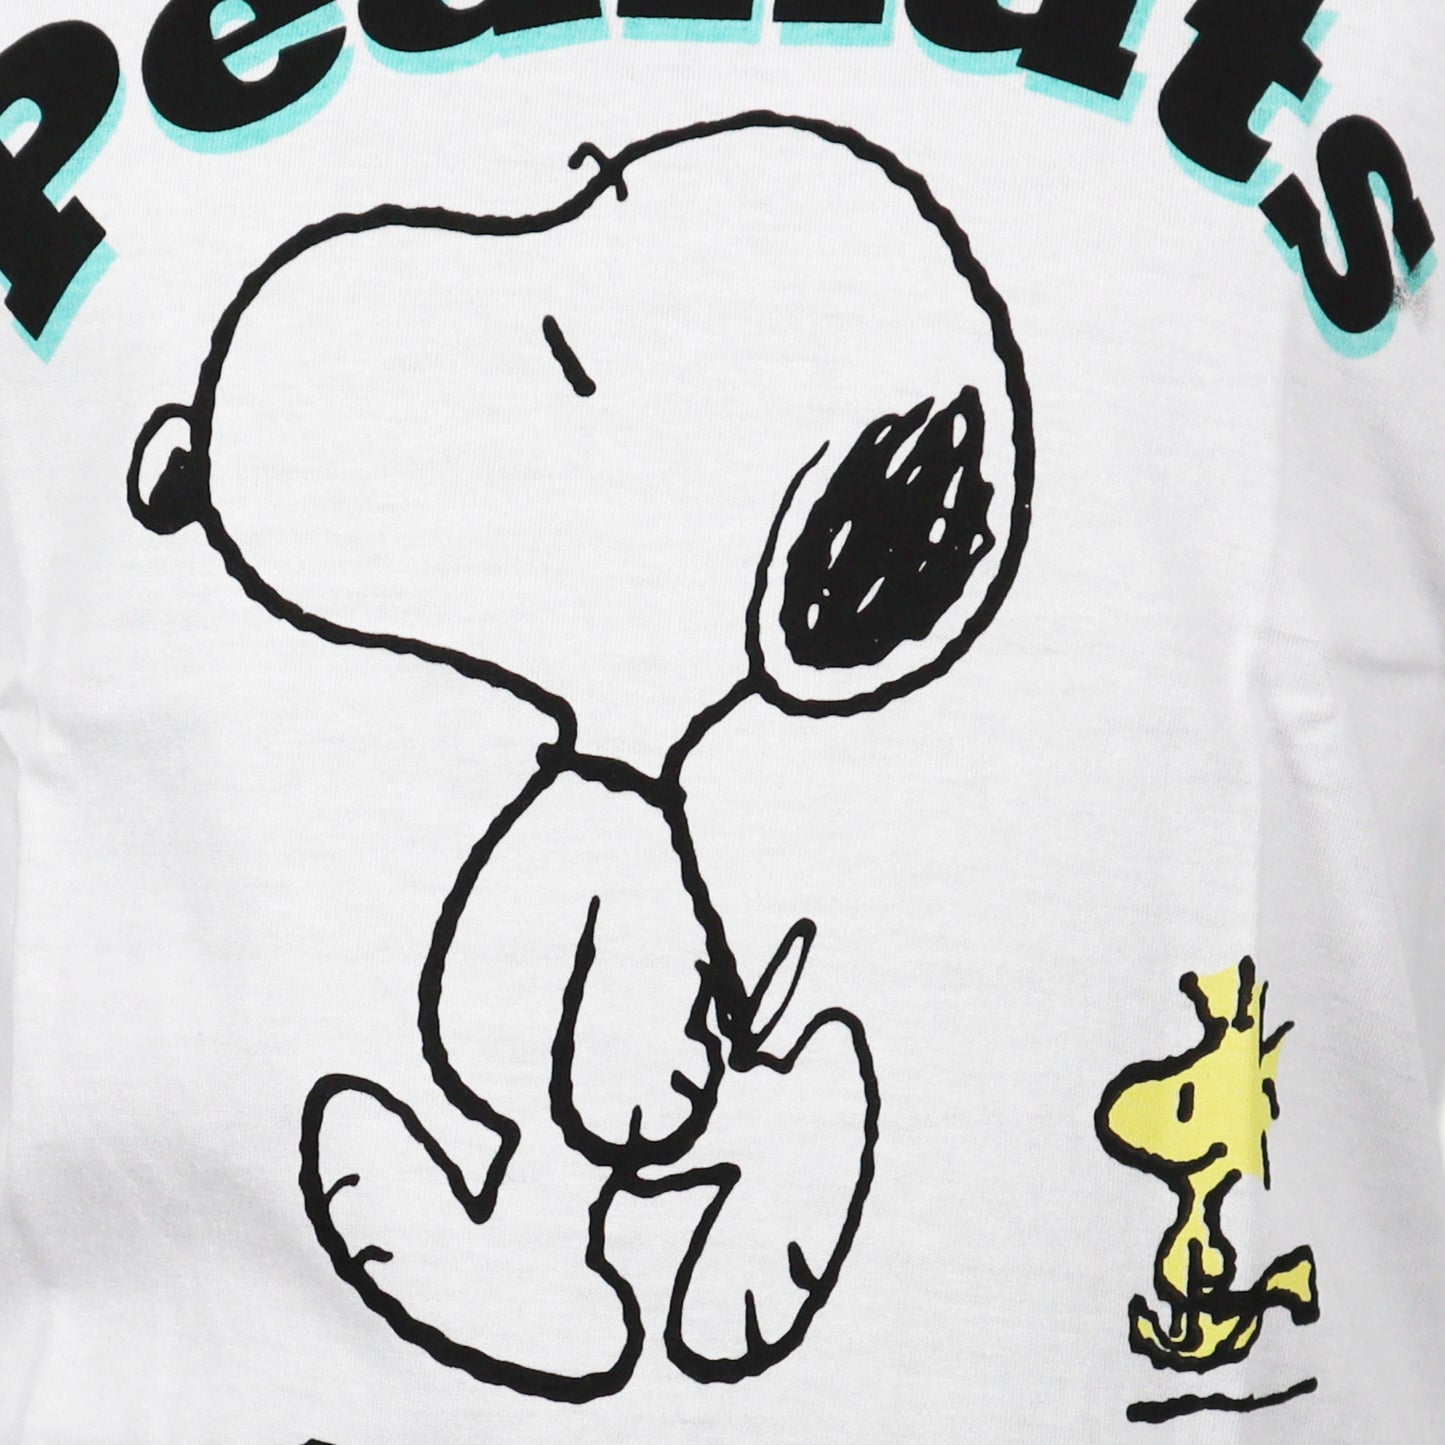 Peanuts Snoopy Jugend Mädchen T-Shirt Shirt